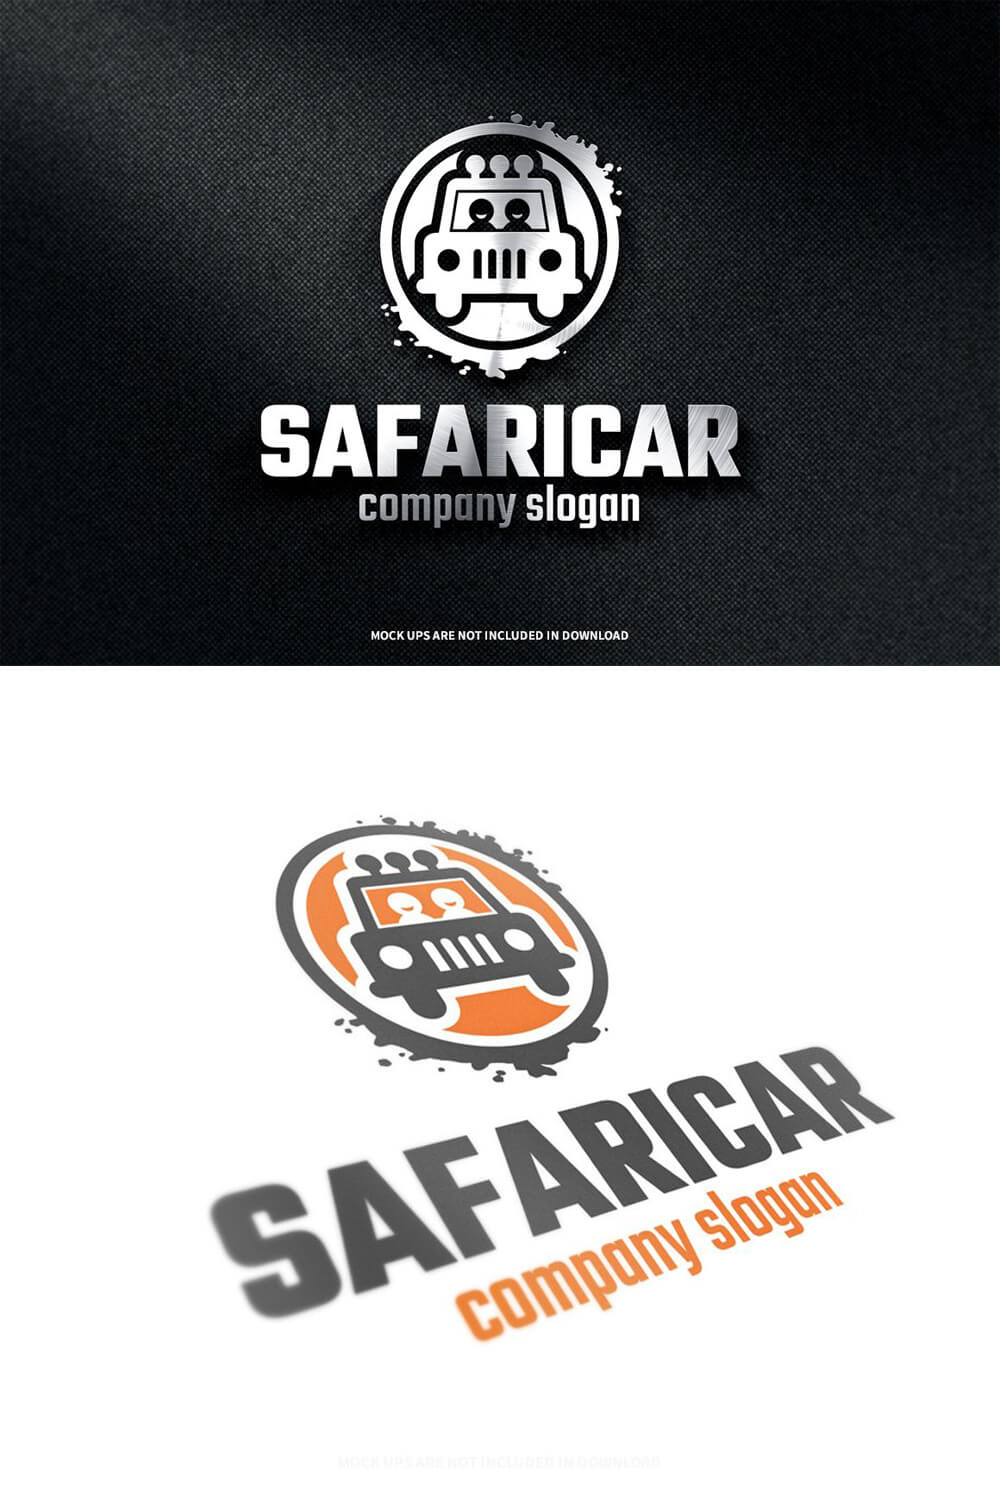 Two Safari car logo templates on black and white background.